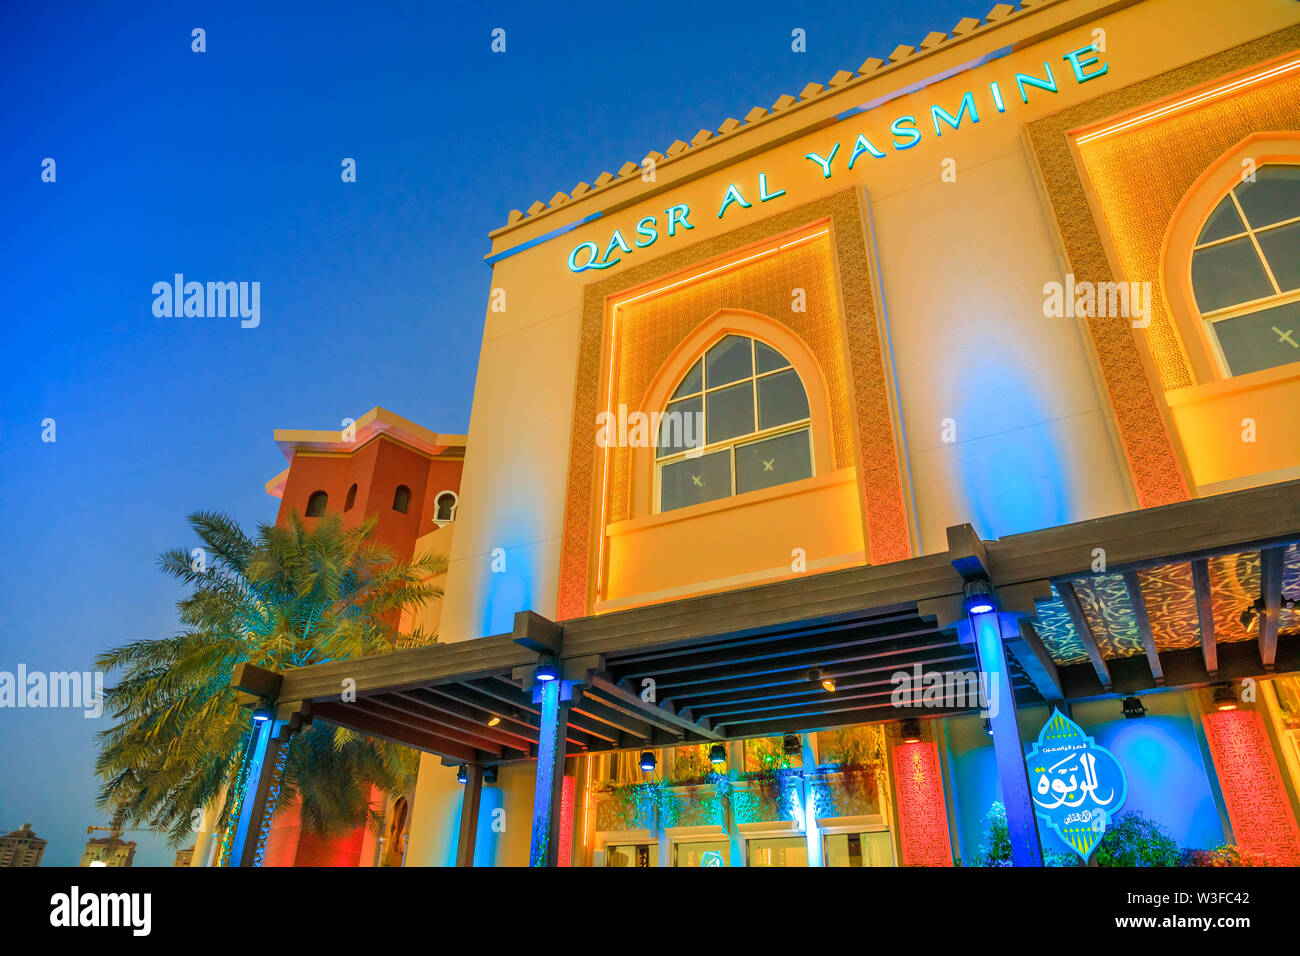 Doha, Qatar - February 18, 2019: facade of Arab restaurant Yasmine Palace on corniche marina promenade in Porto Arabia at the Pearl-Qatar, artificial Stock Photo